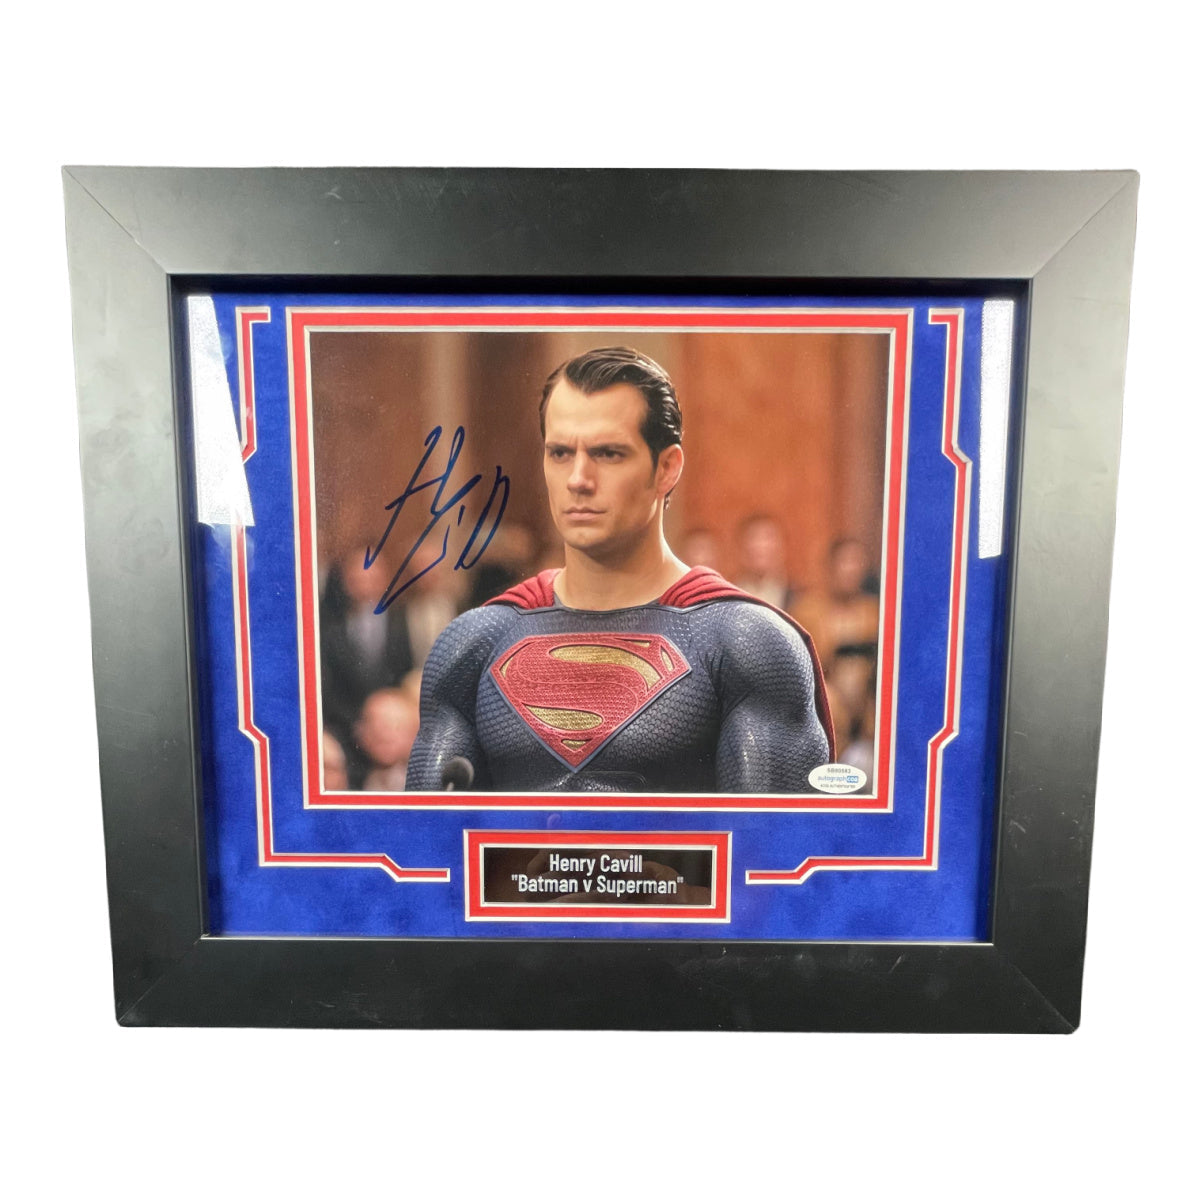 Henry Cavill Signed 8x10 Photo DC Superman Framed Autographed AutographCOA 2